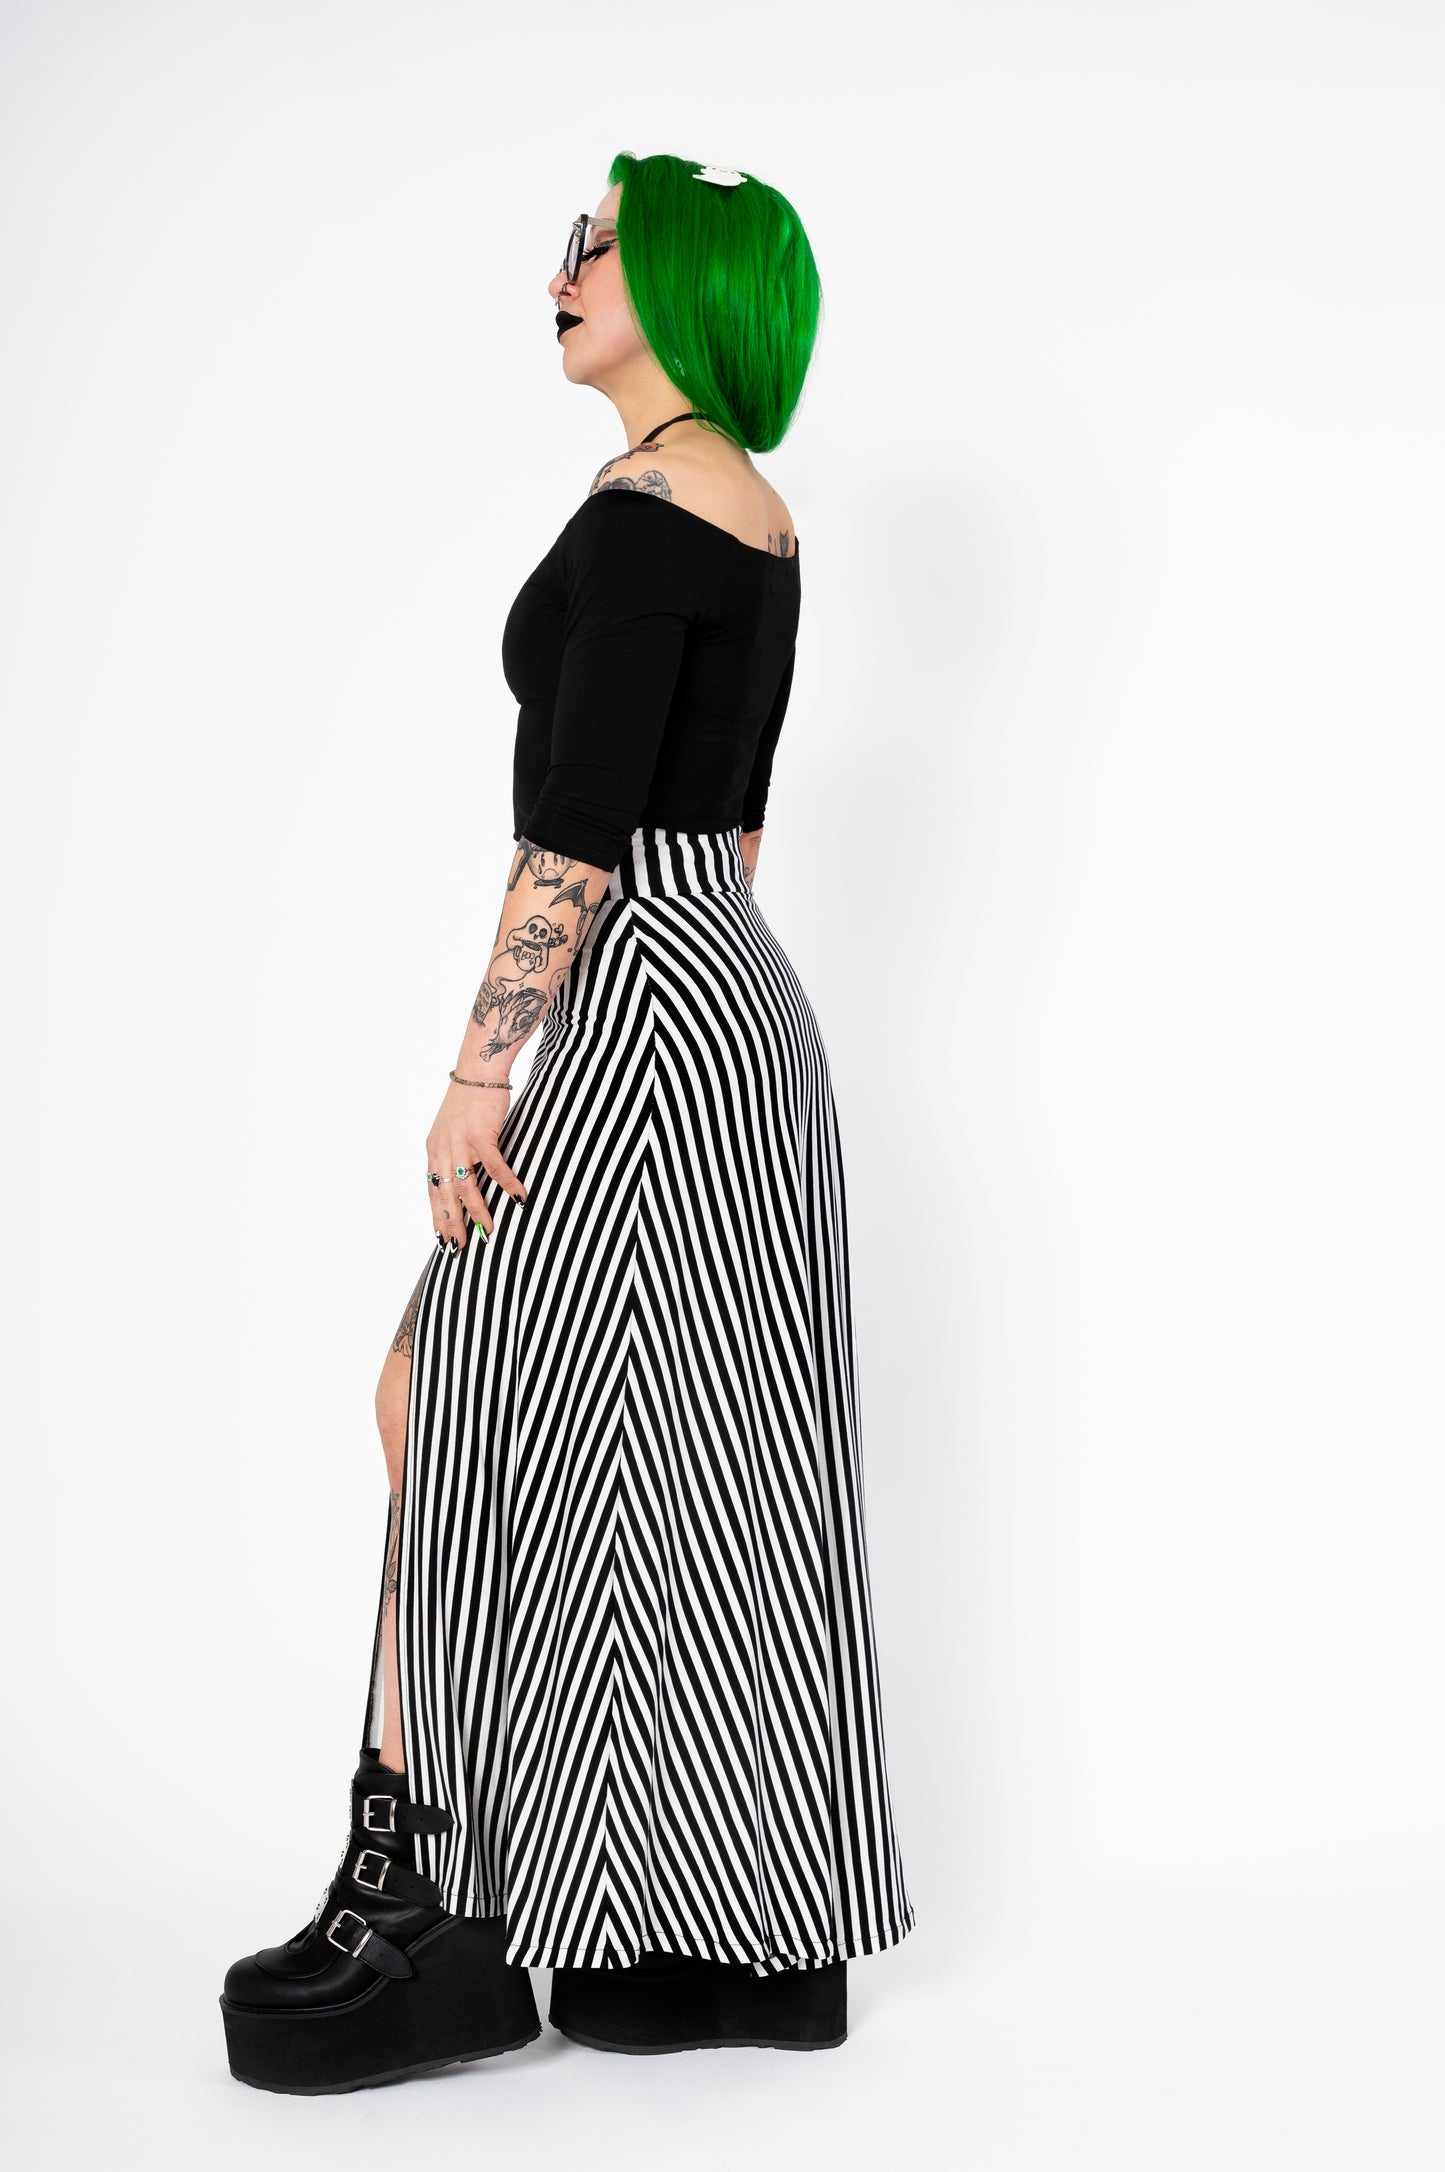 Plan 9 skirt with shorts - black/white stripes